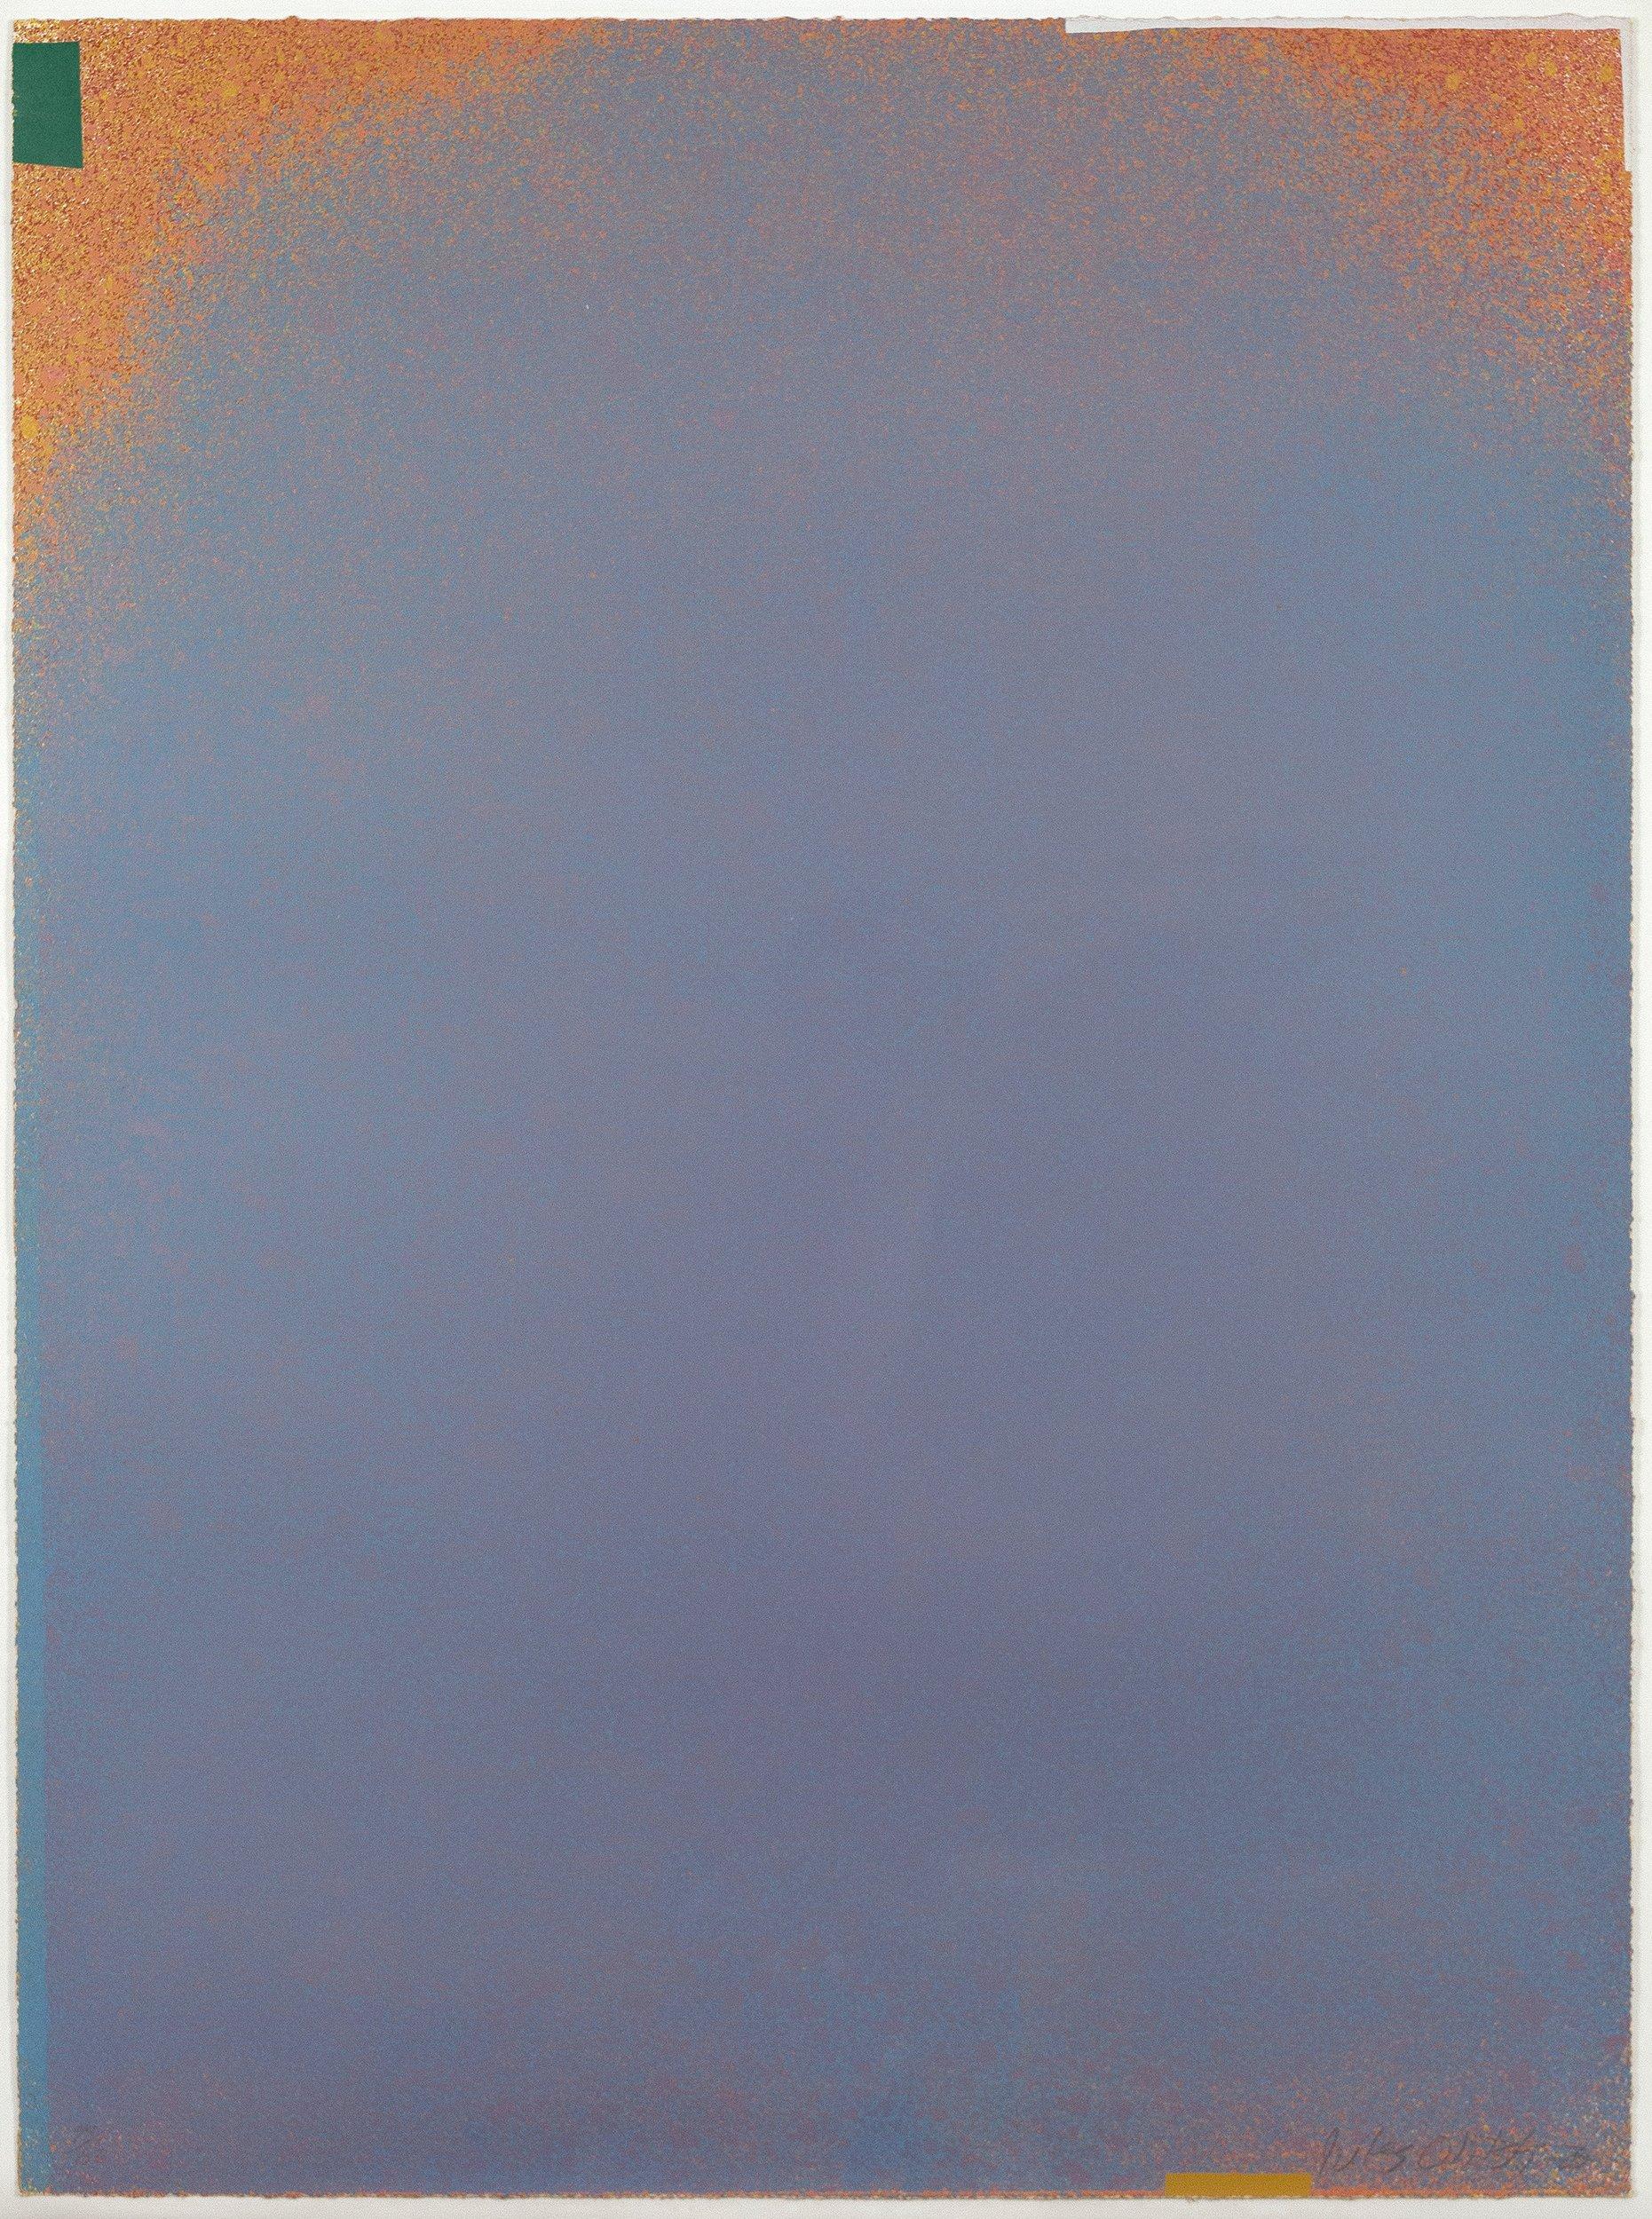 GRAPHIC SUITE I (MAUVE/BLUE) - Print by Jules Olitski